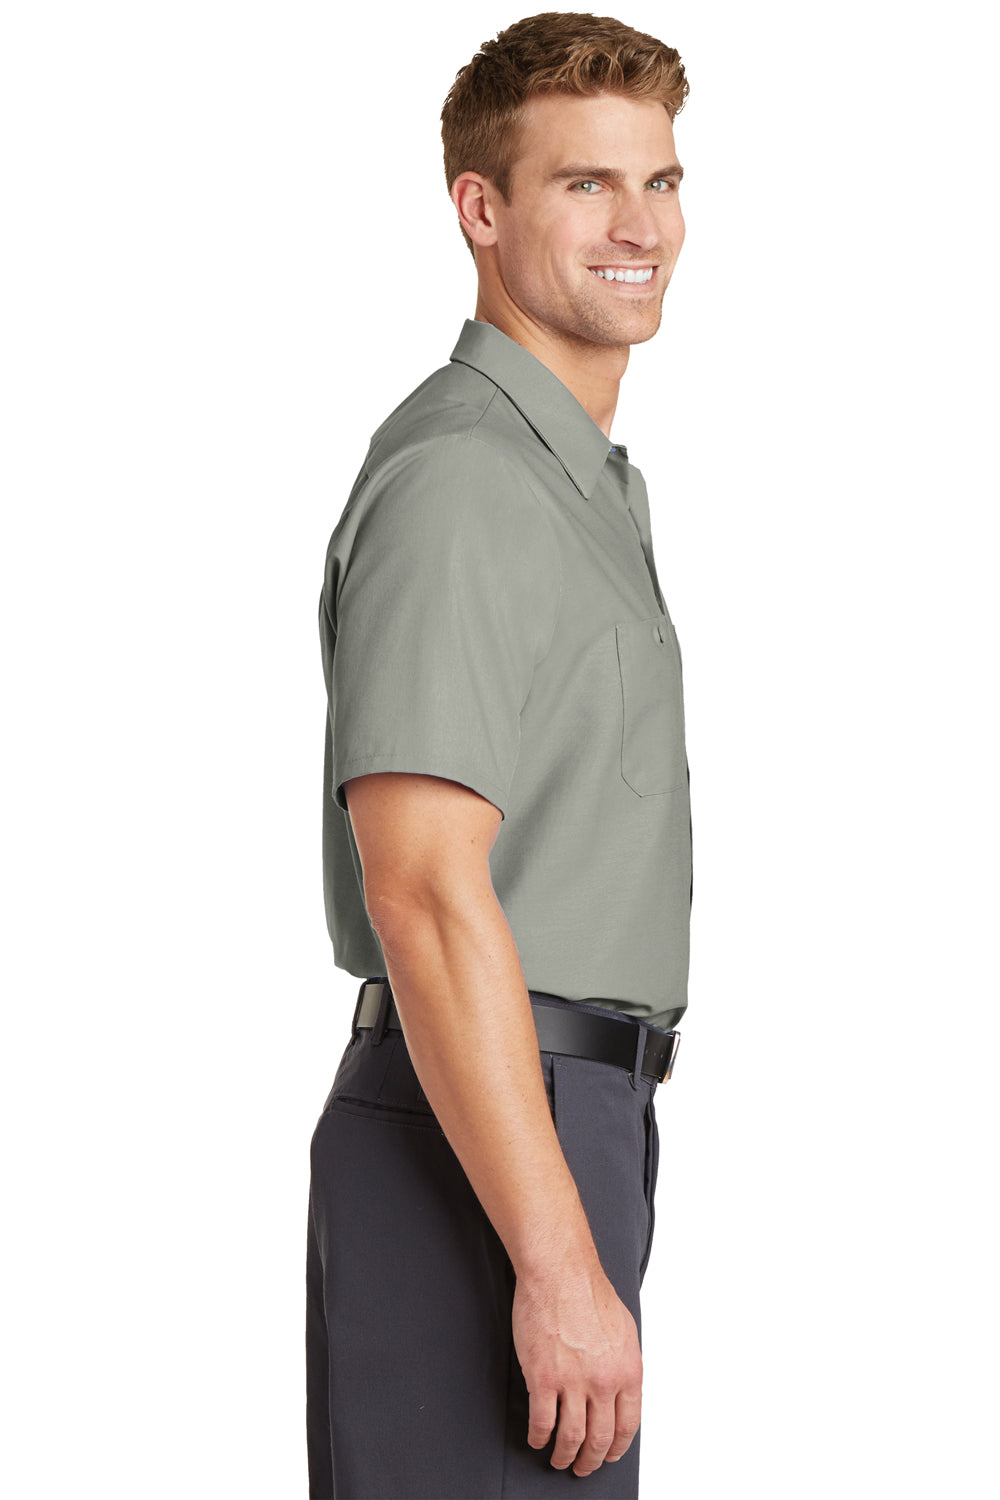 Red Kap SP24 Mens Industrial Moisture Wicking Short Sleeve Button Down Shirt w/ Double Pockets Light Grey Side